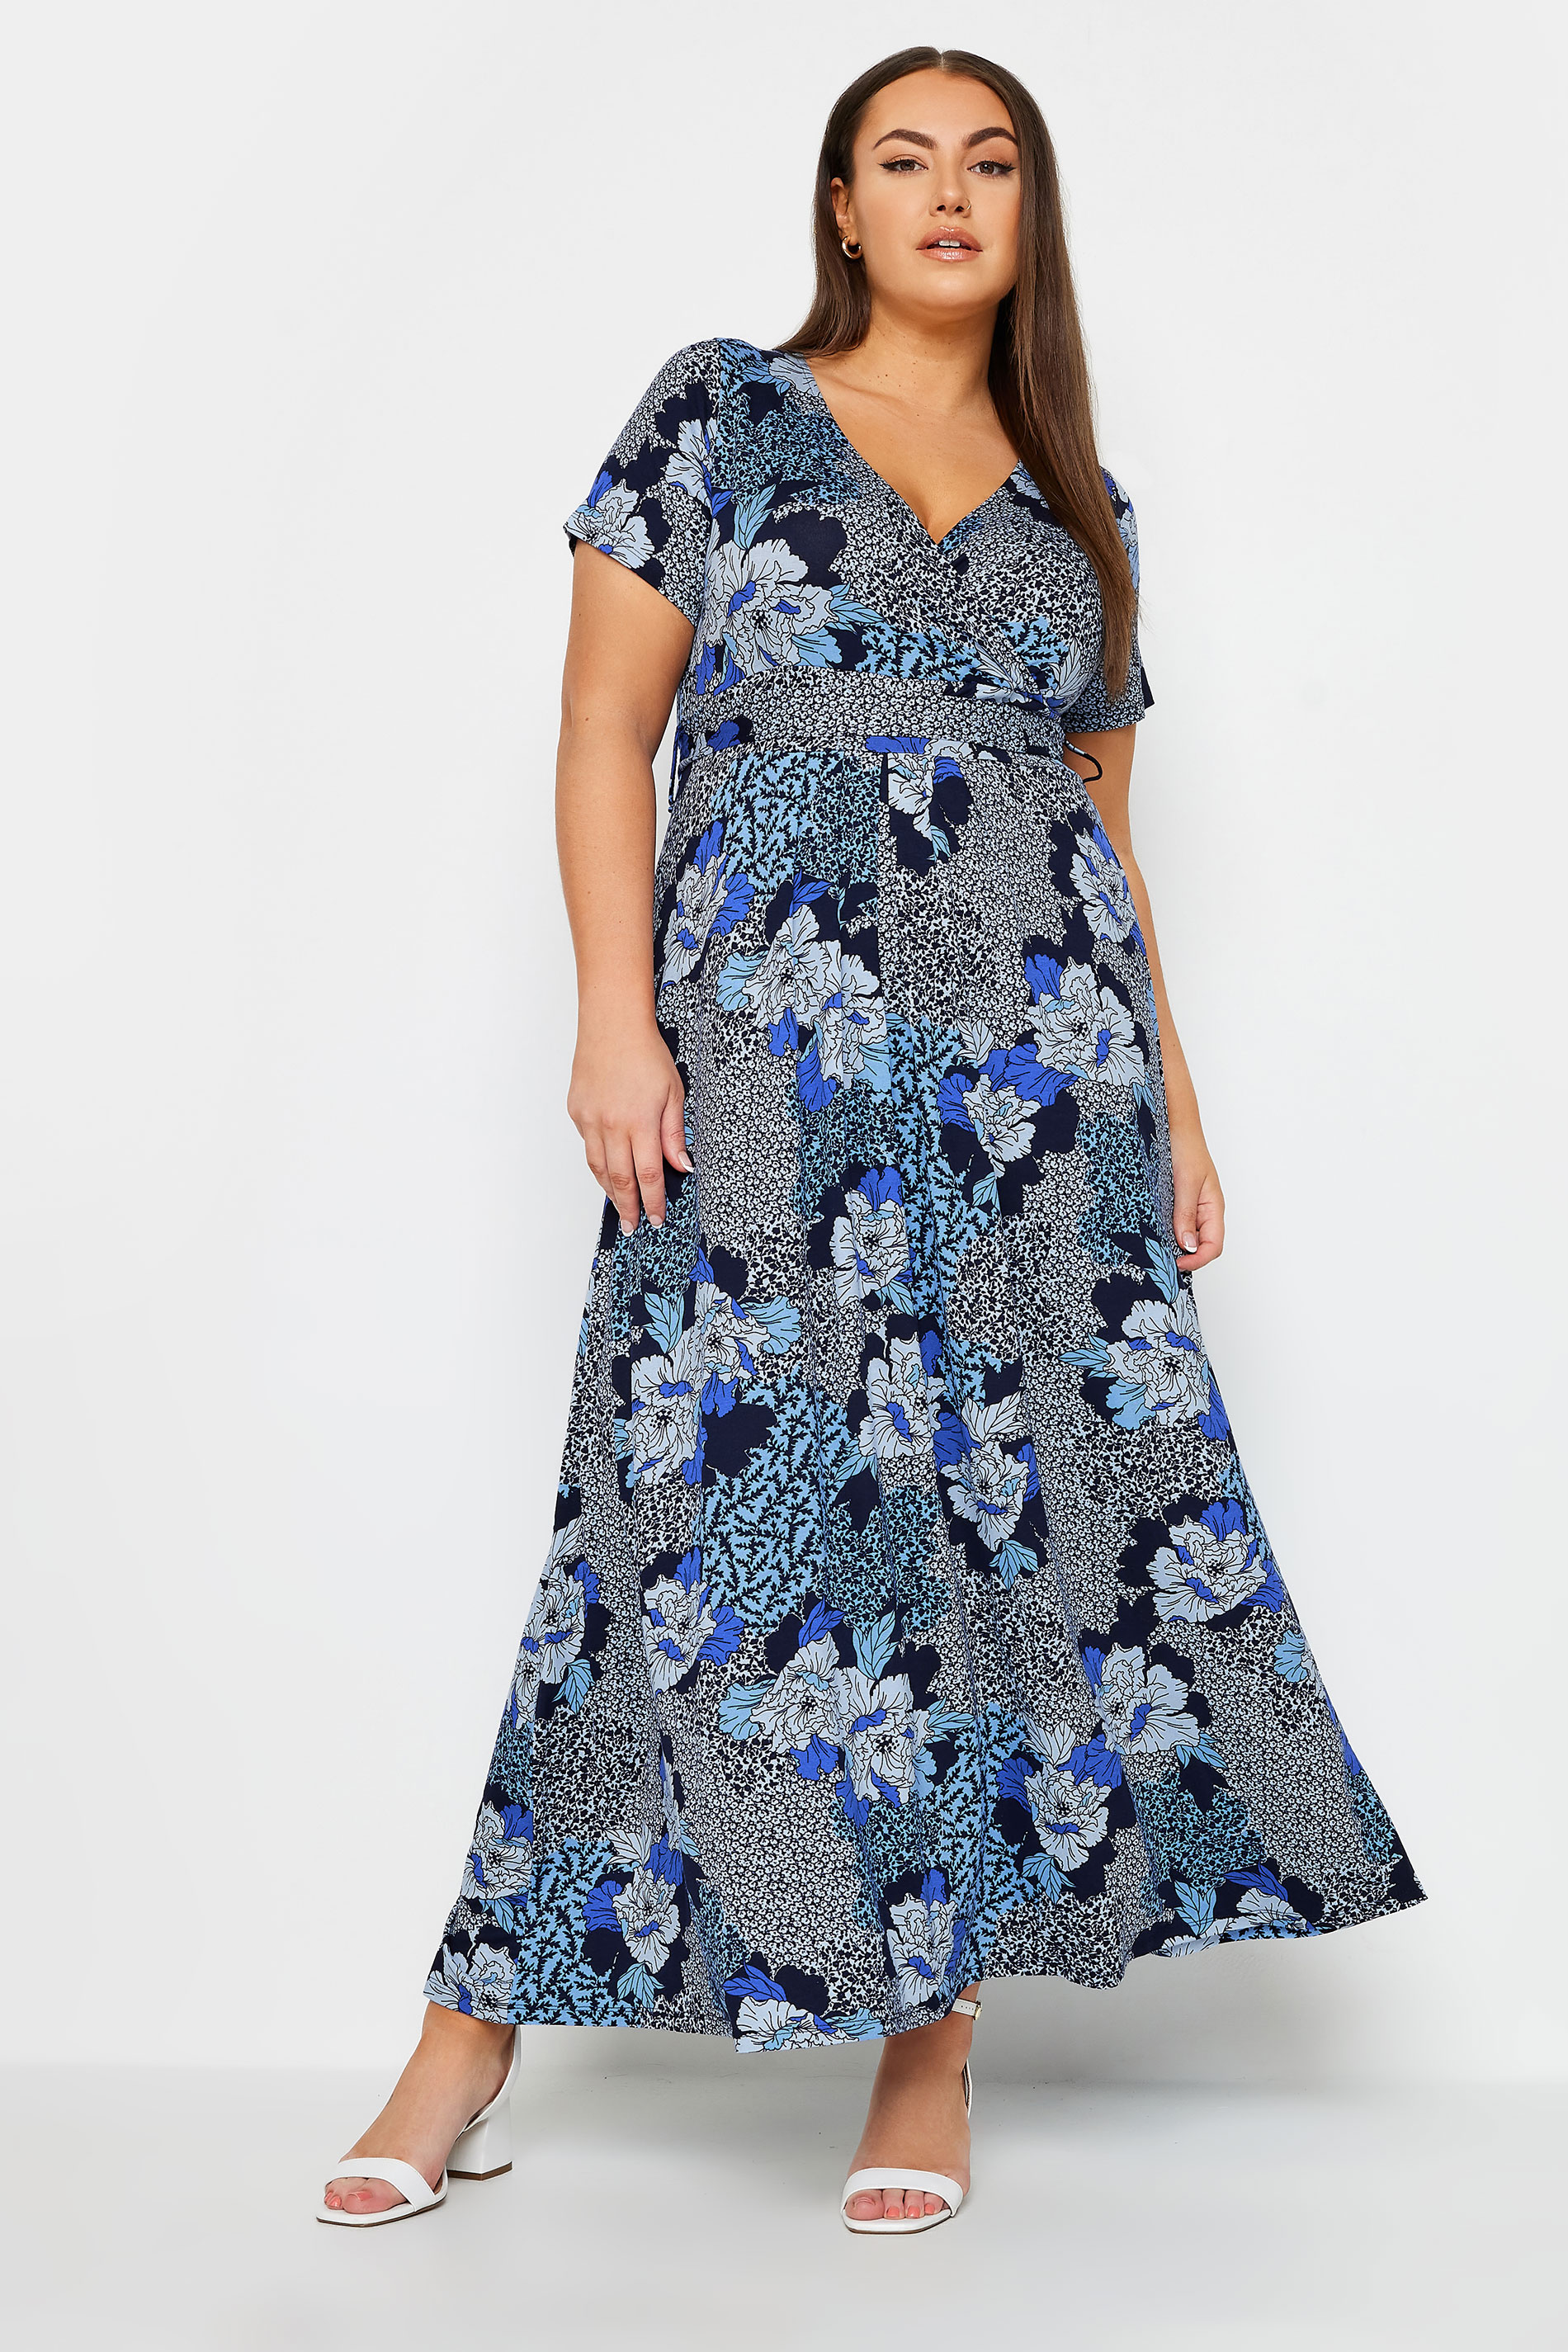 YOURS Plus Size Blue Floral Print Wrap Maxi Dress | Yours Clothing 2